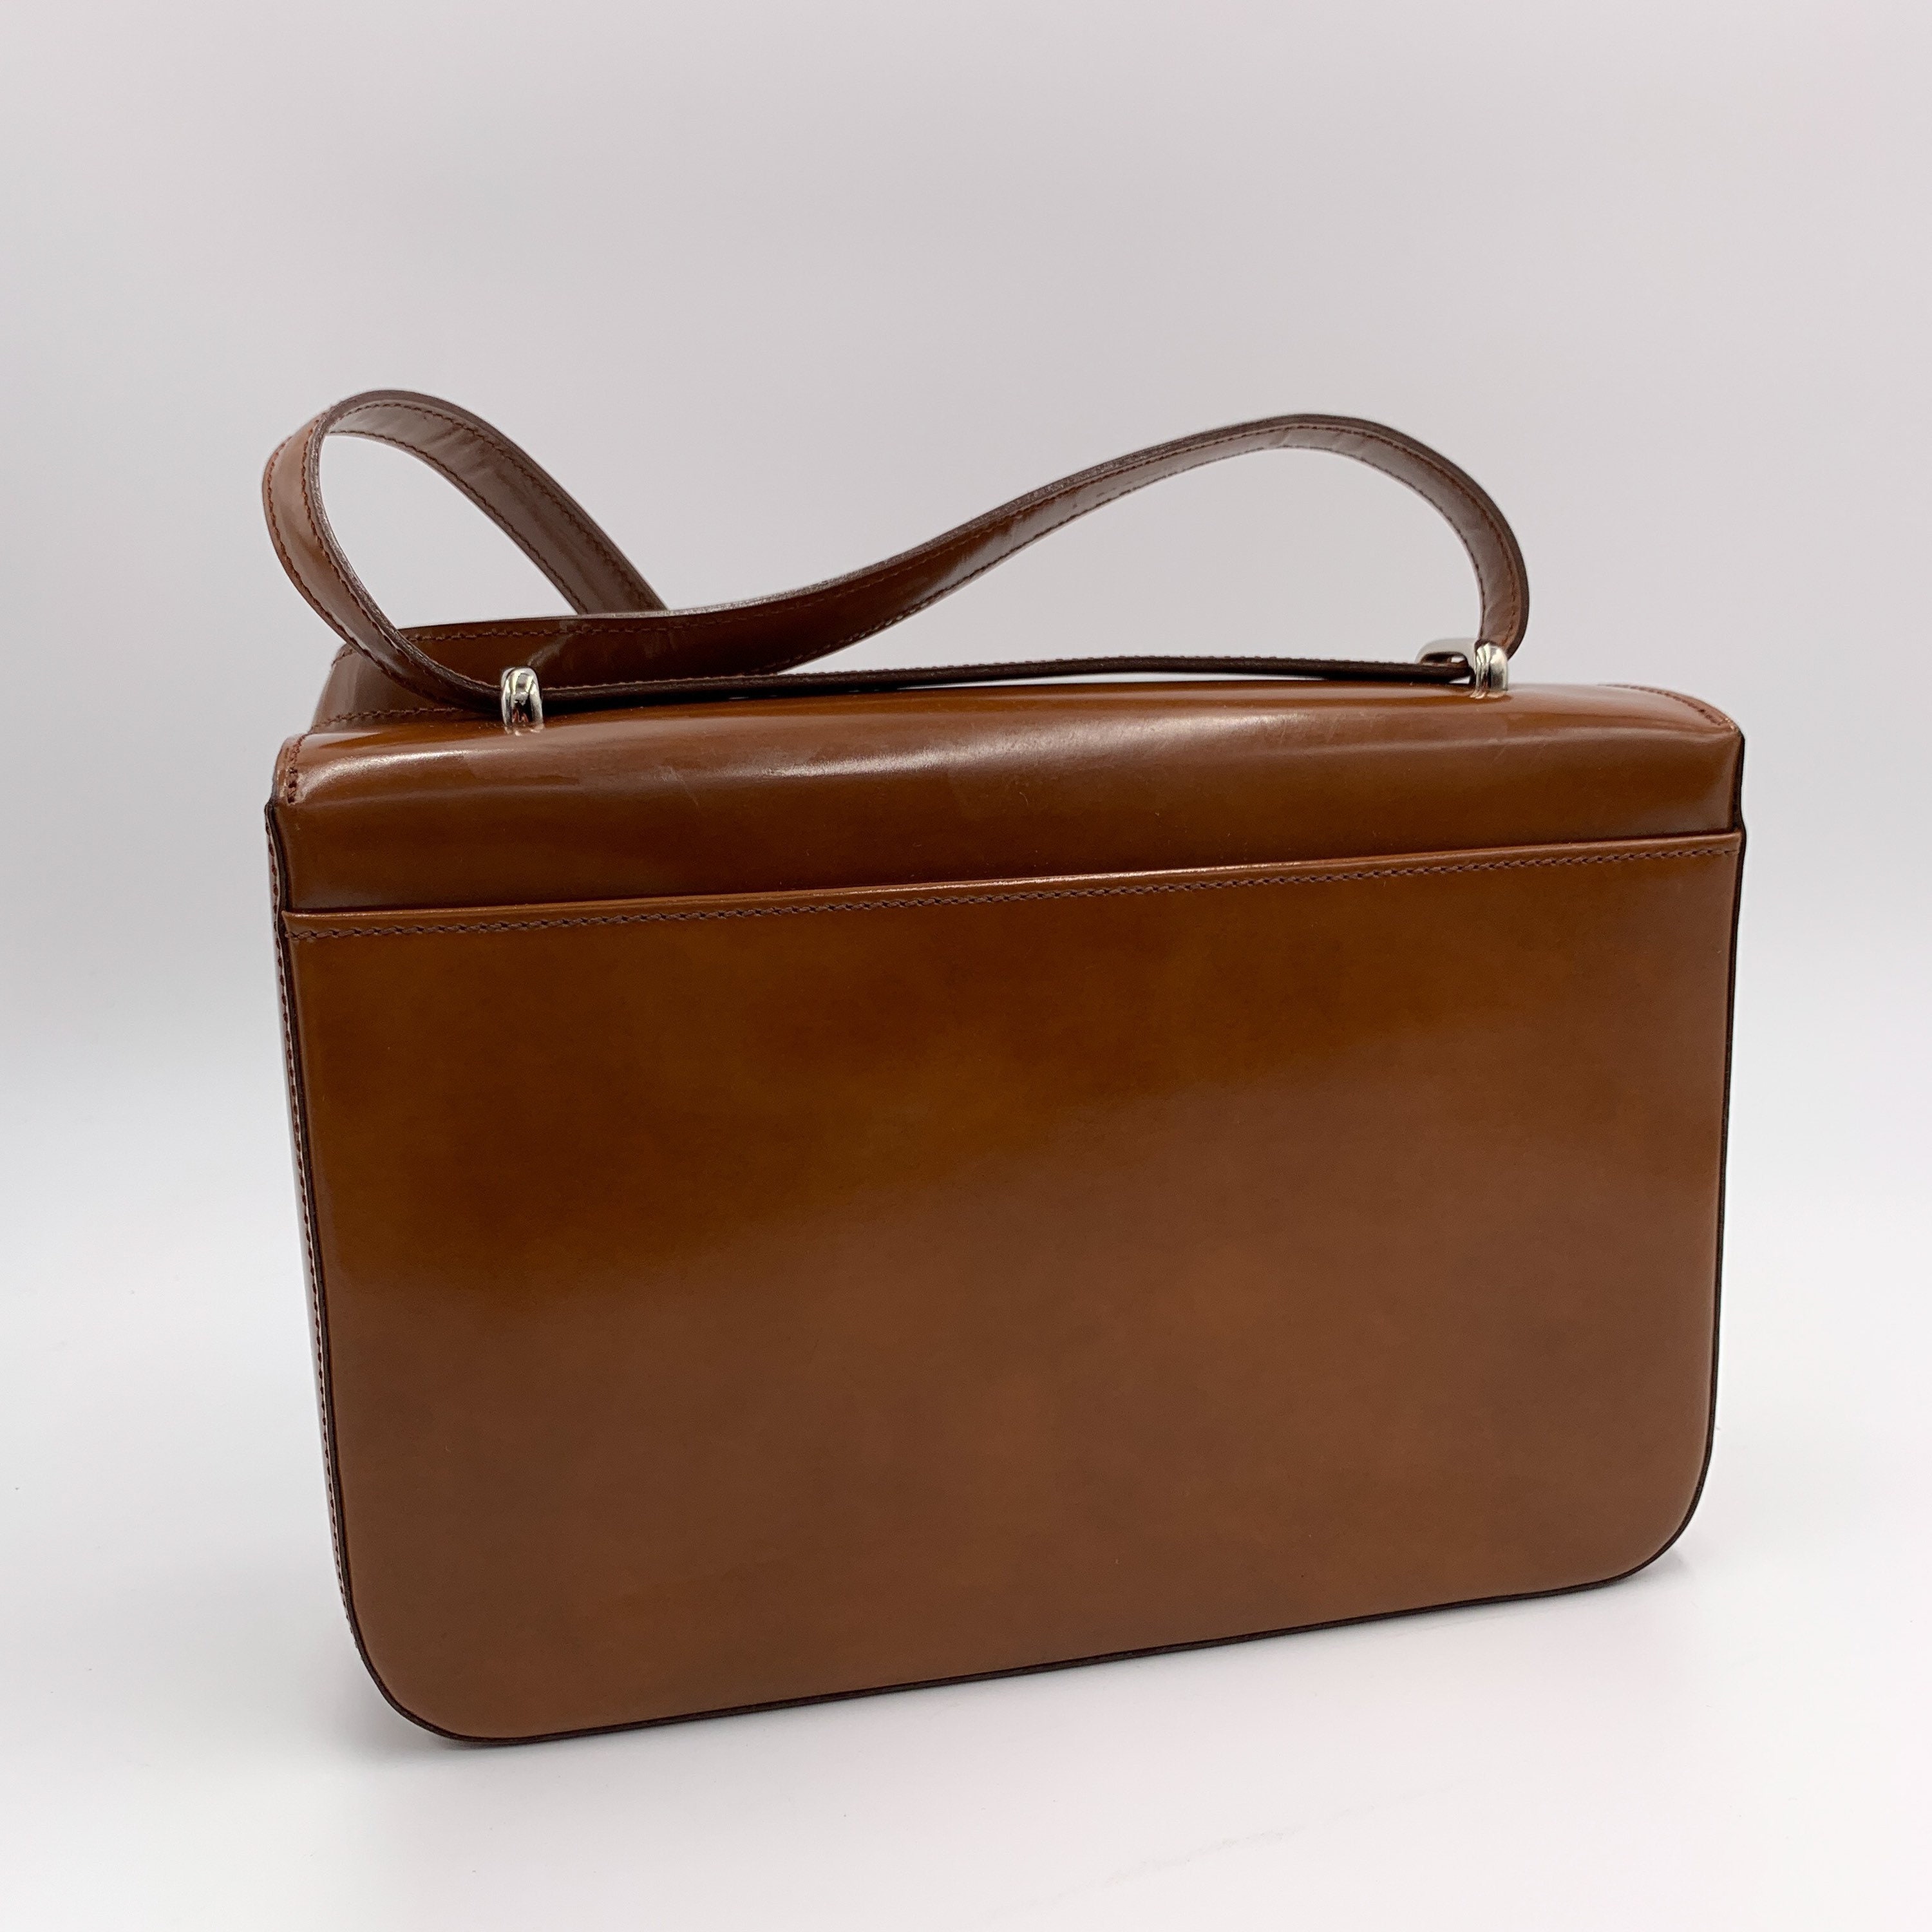 Panthère cartier bag: opinion? : r/handbags